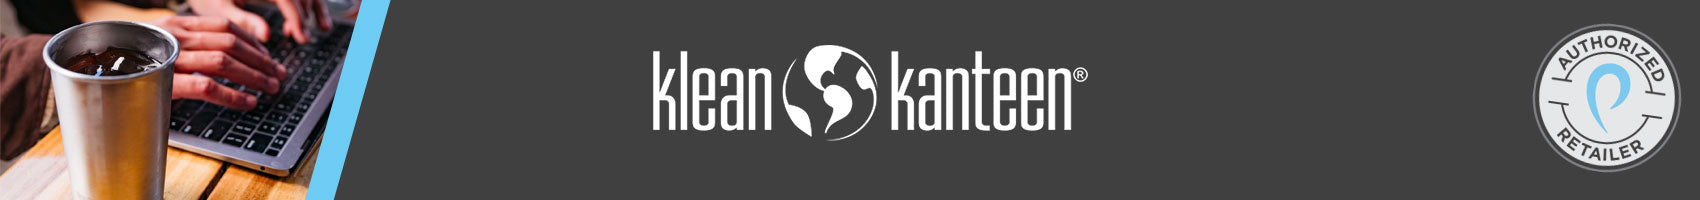 Klean Kanteen